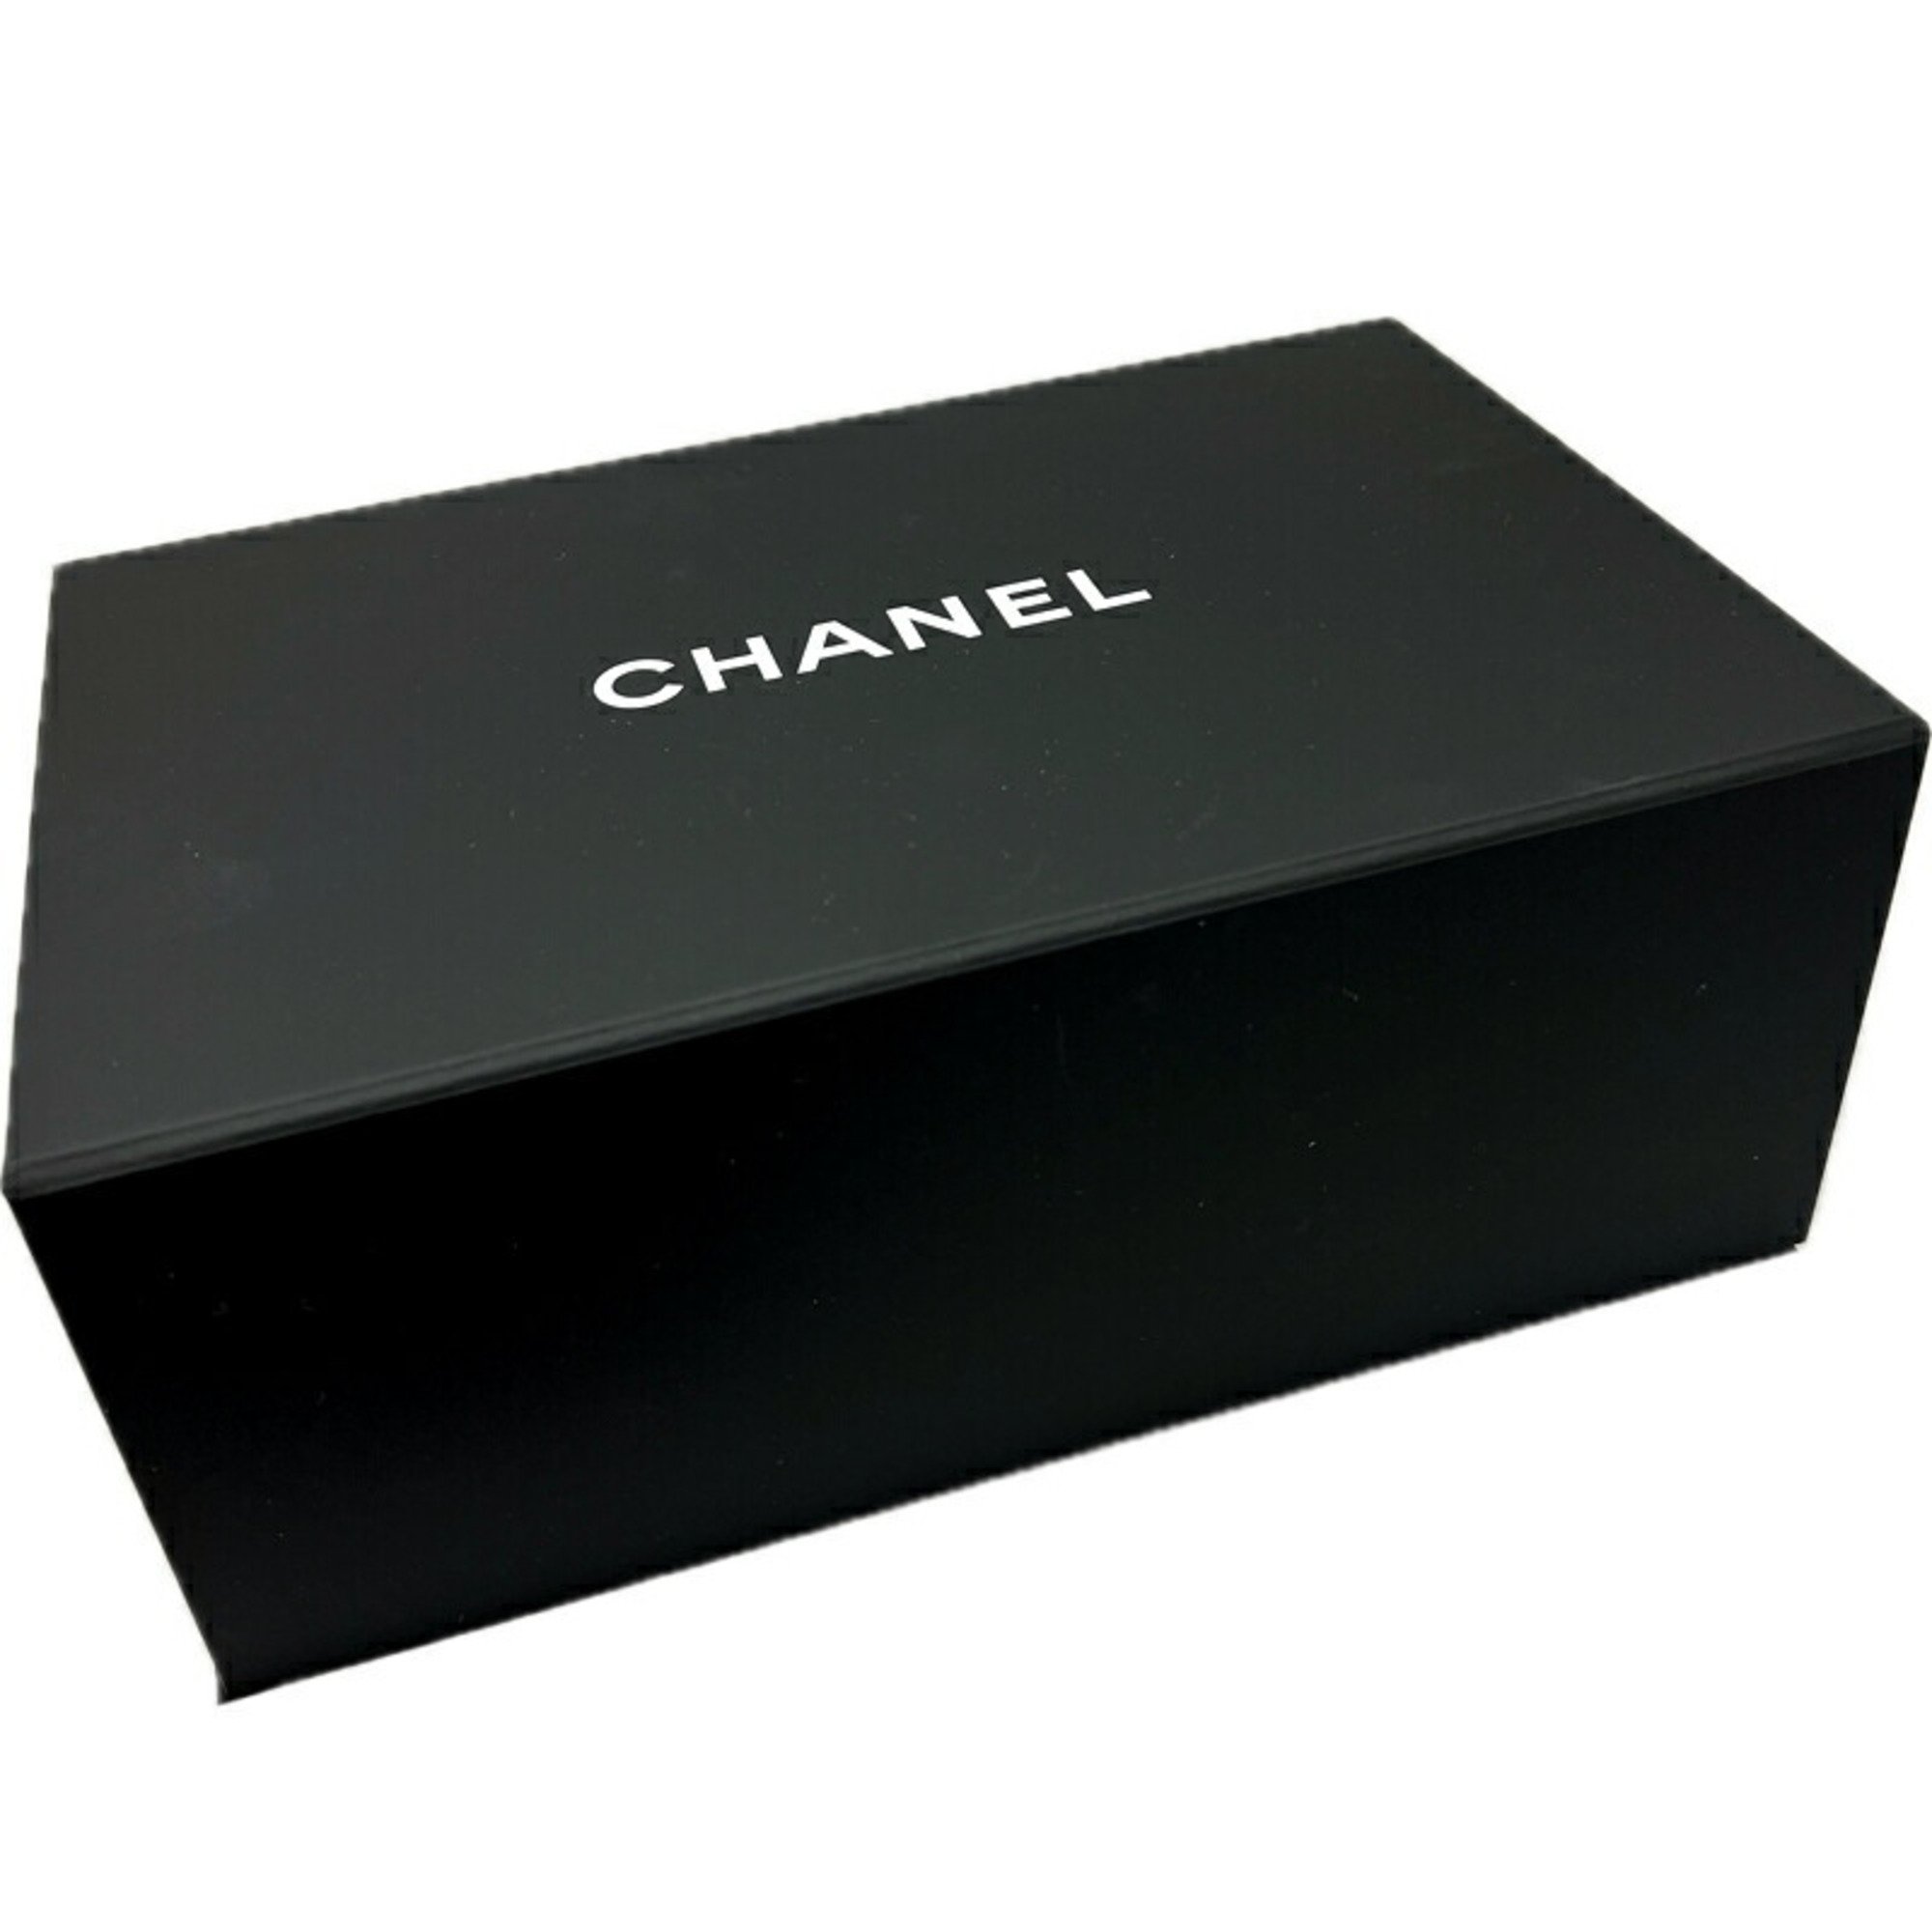 CHANEL Chanel Matelasse Chain Shoulder Bag Denim Blue Handbag Compact Women's